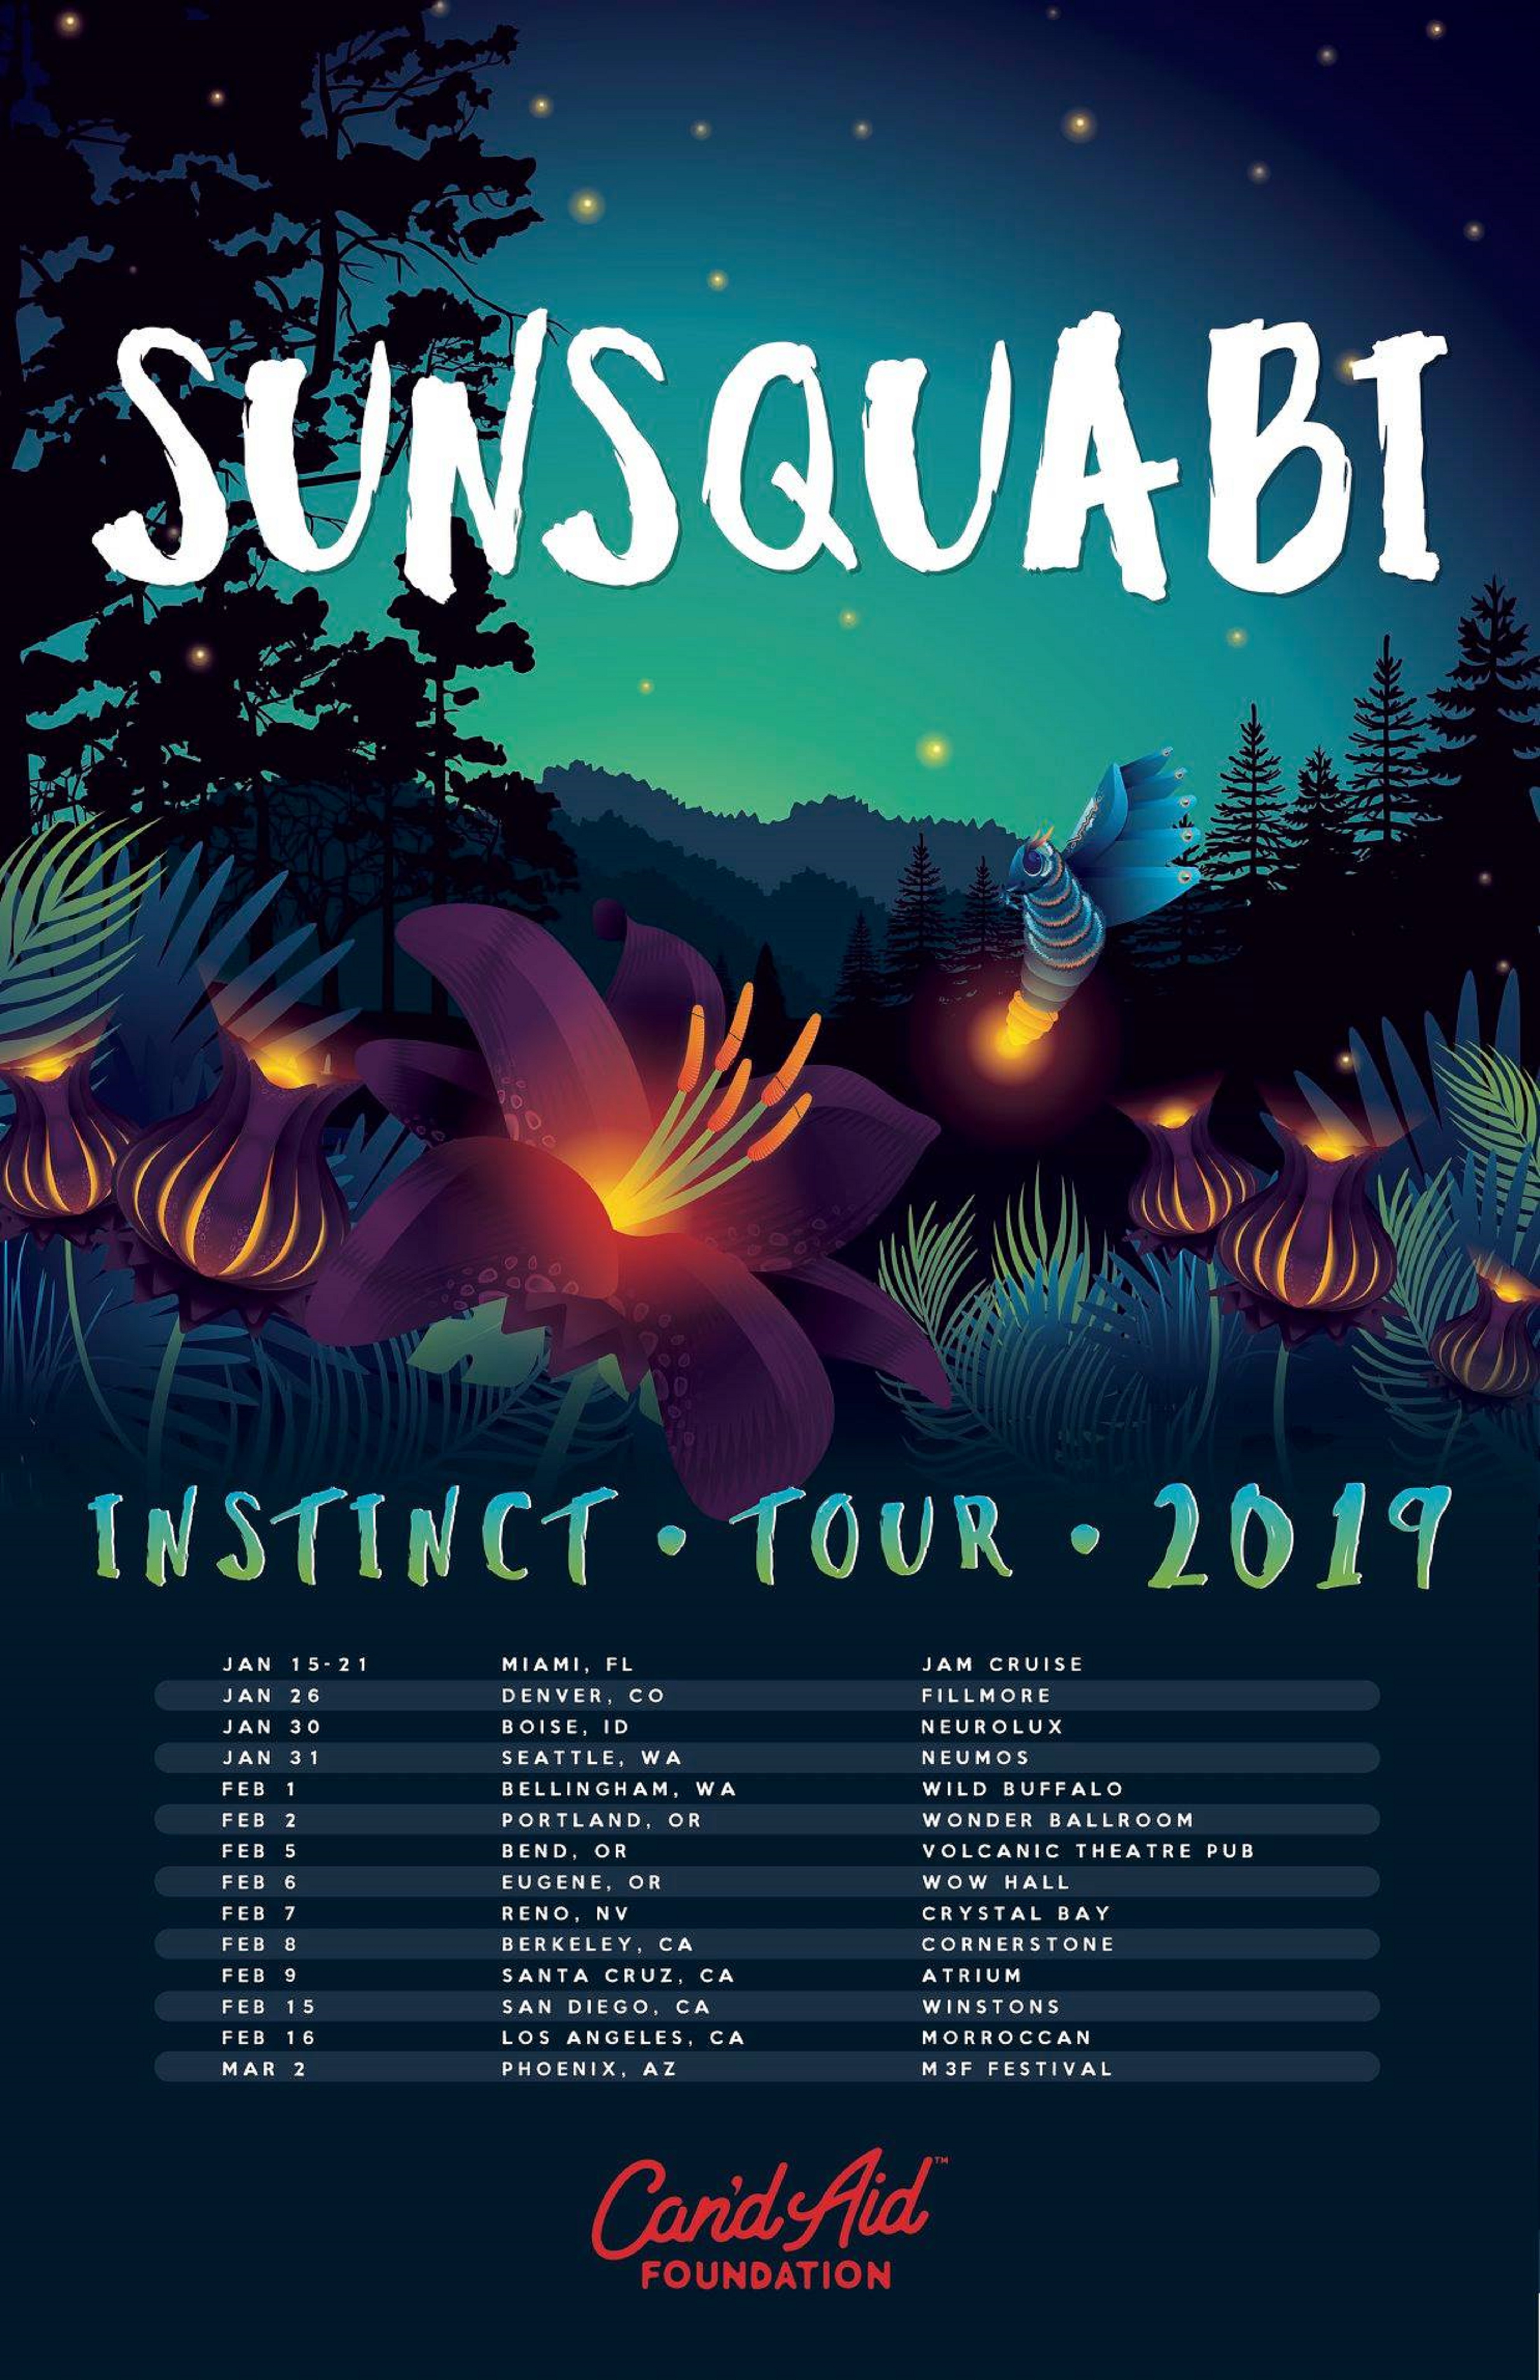 SunSquabi 2019 Instinct Tour Begins January 15th